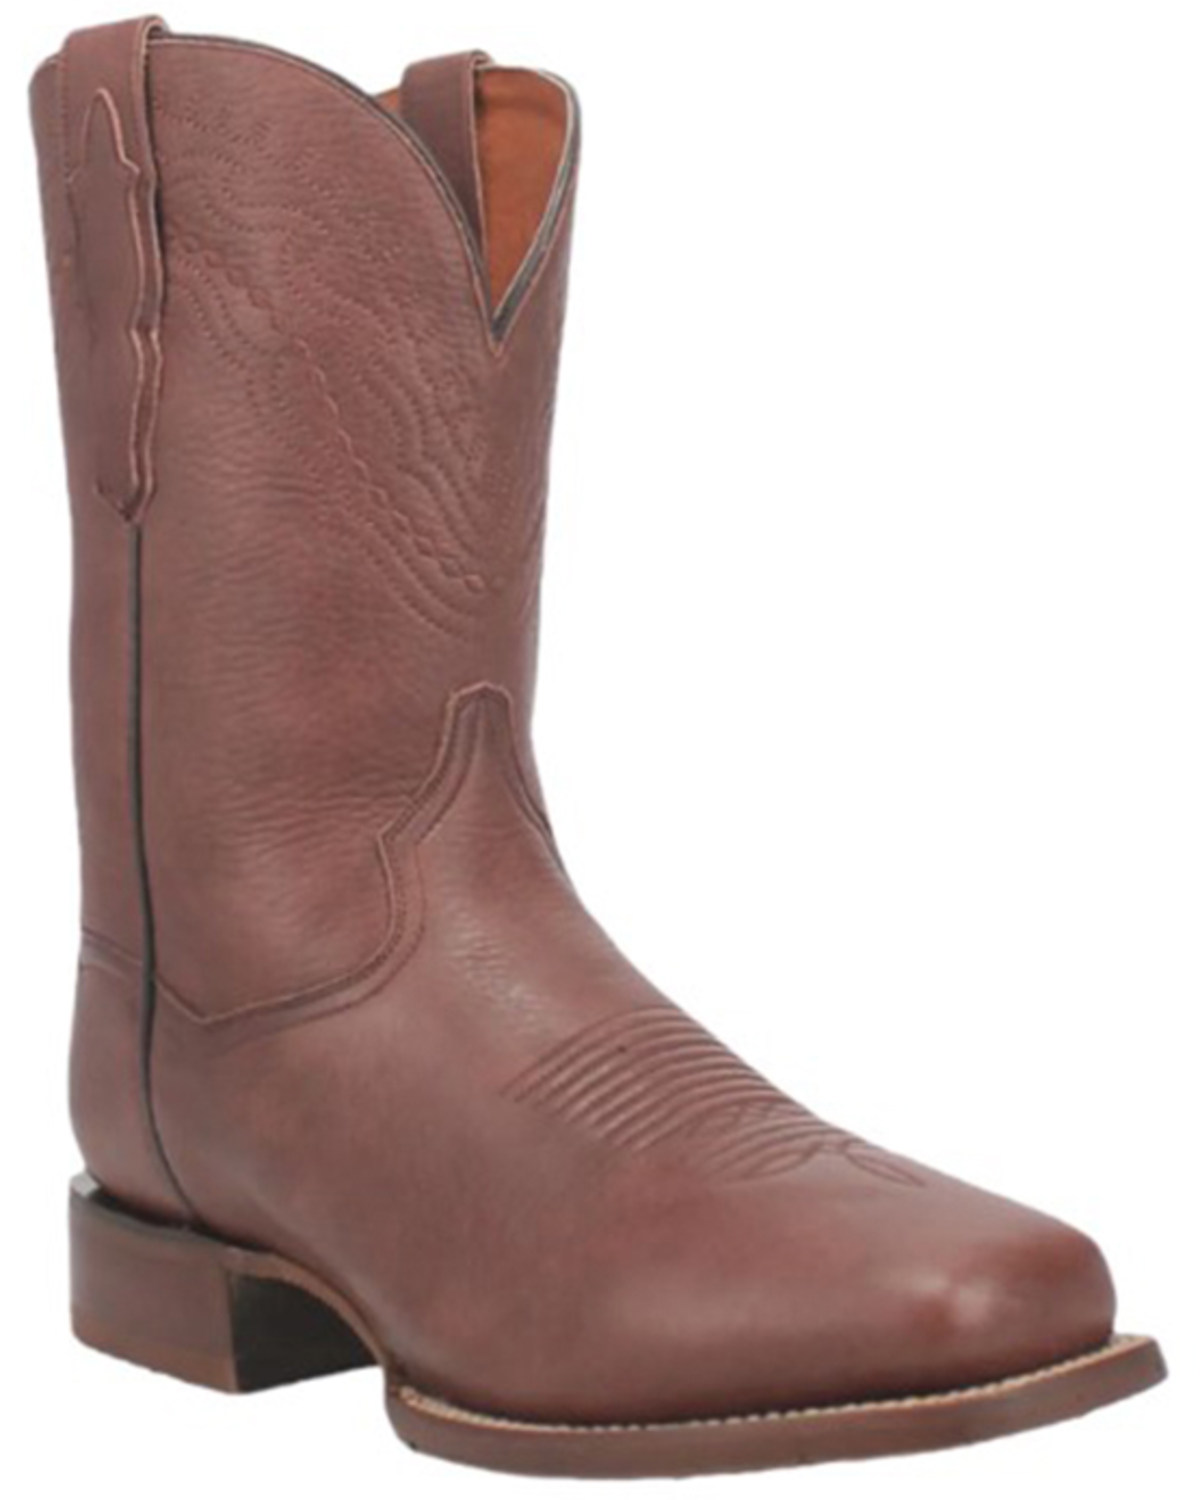 Dan Post Men's Milo Western Boots - Broad Square Toe